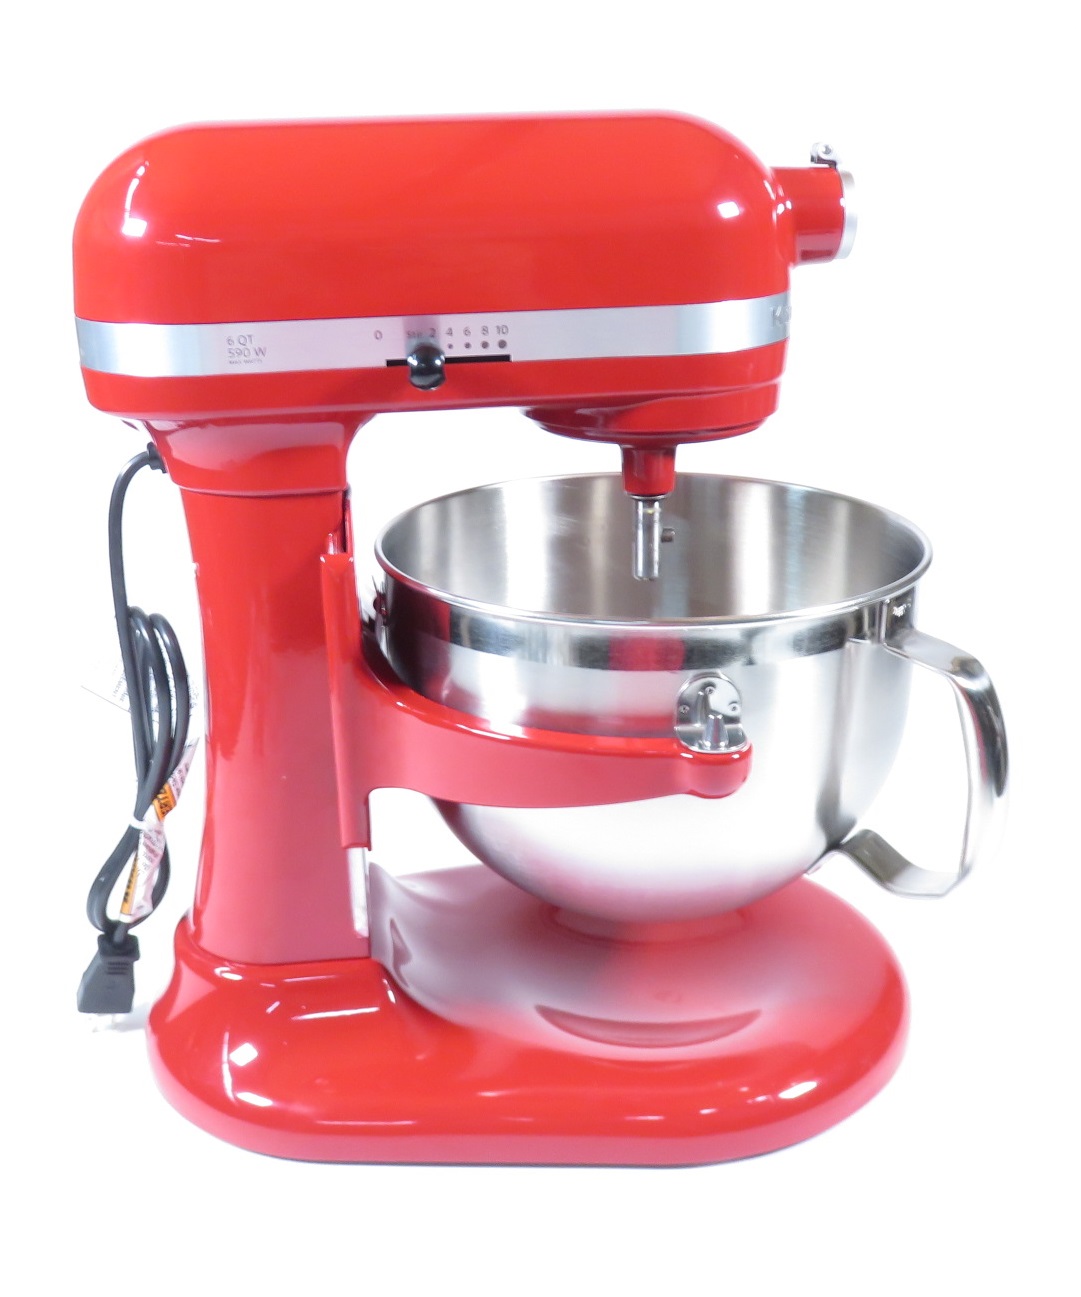 KitchenAid Professional 6 quart 590W Bowl-Lift Stand Mixer | Silver |  GIFT!!!